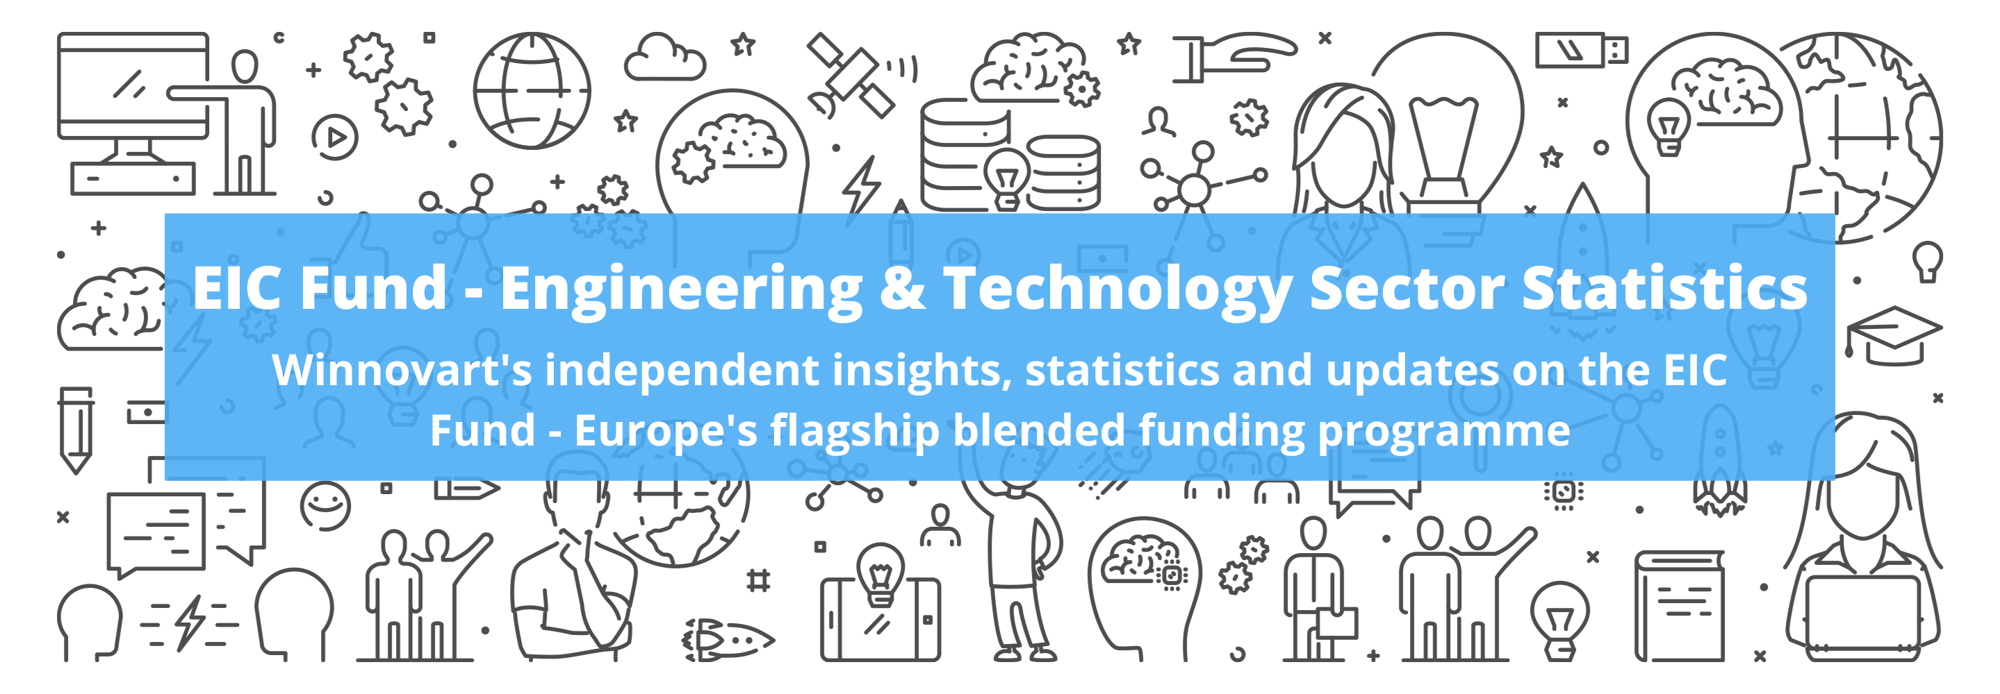 EIC Fund - Engineering & Technology Statistics